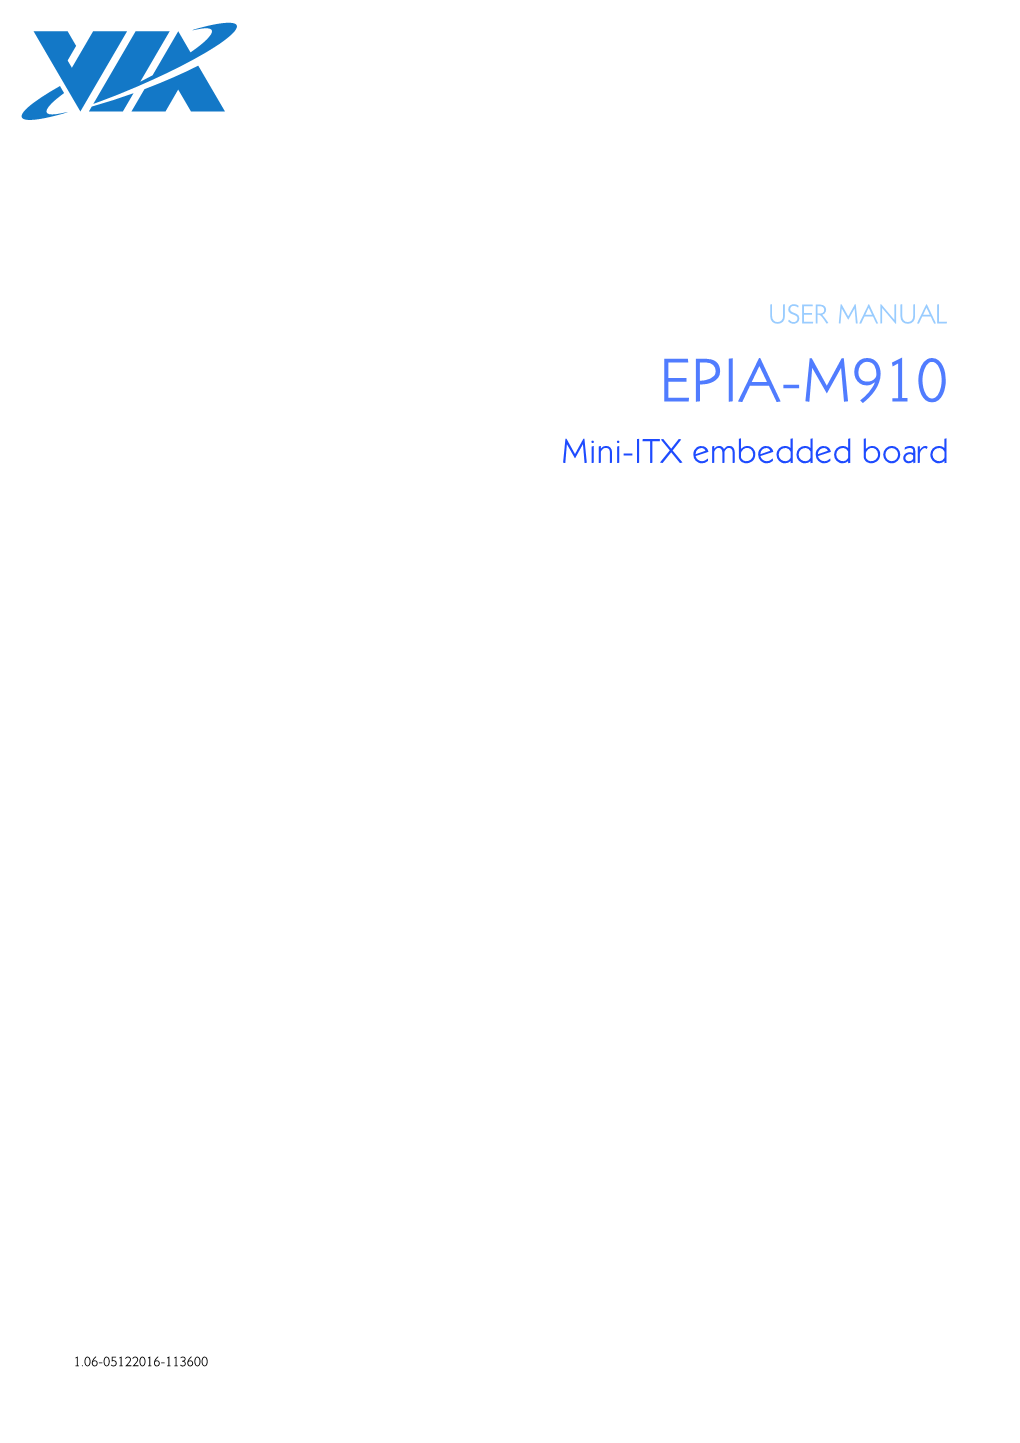 EPIA-M910 Mini-ITX Embedded Board